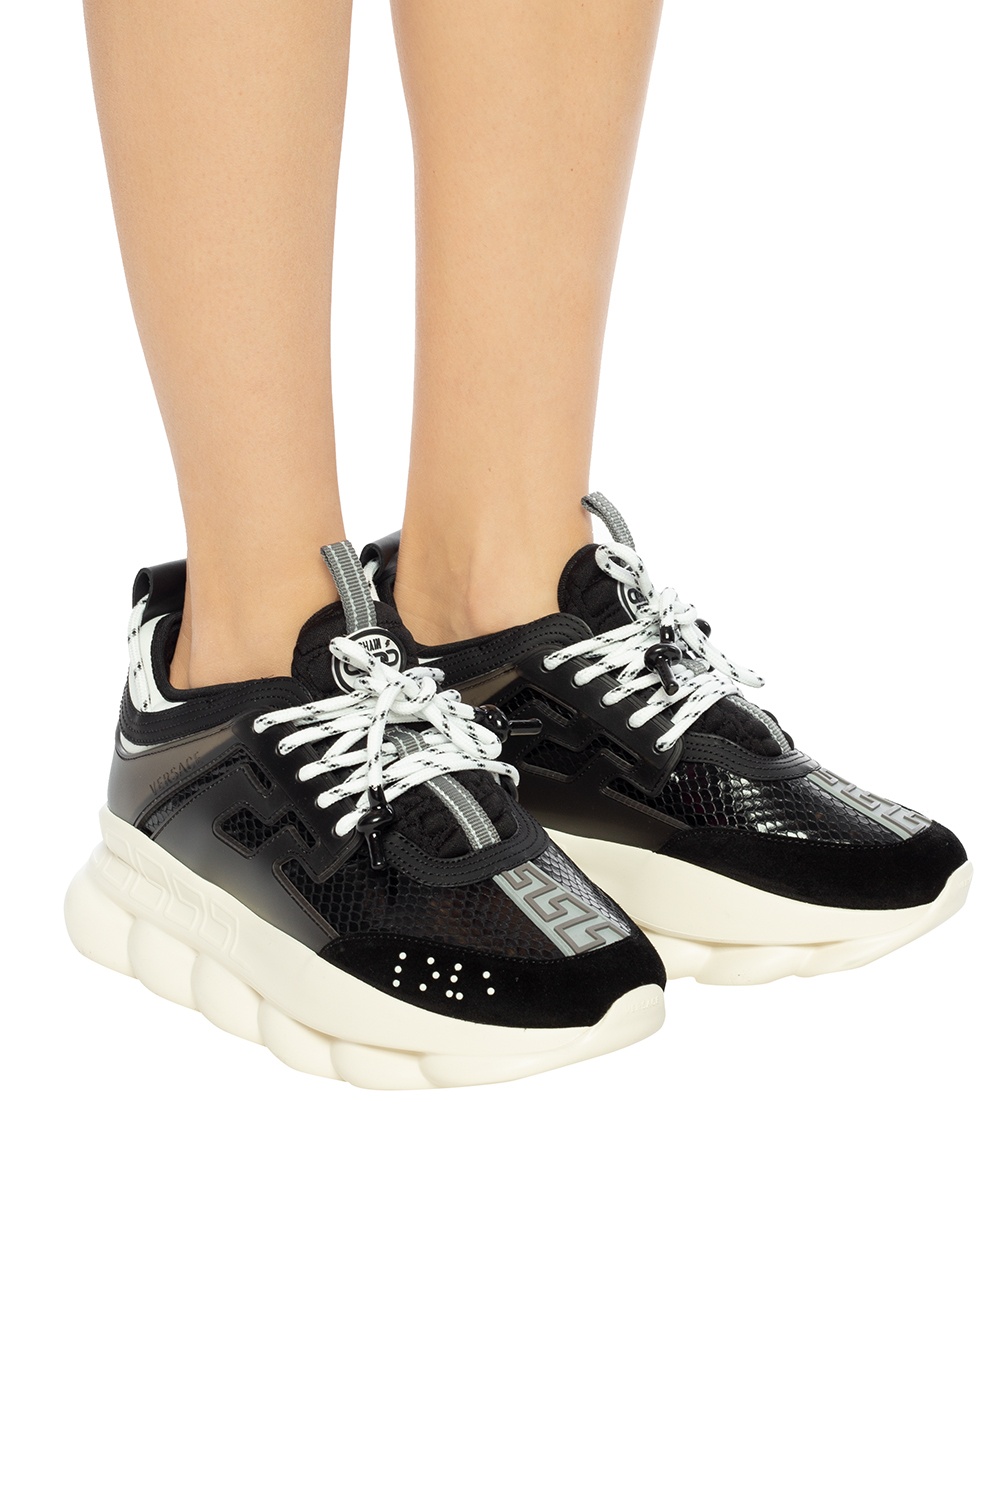 Versace x 2 Chainz Black Chain Reaction Sneakers - size 41